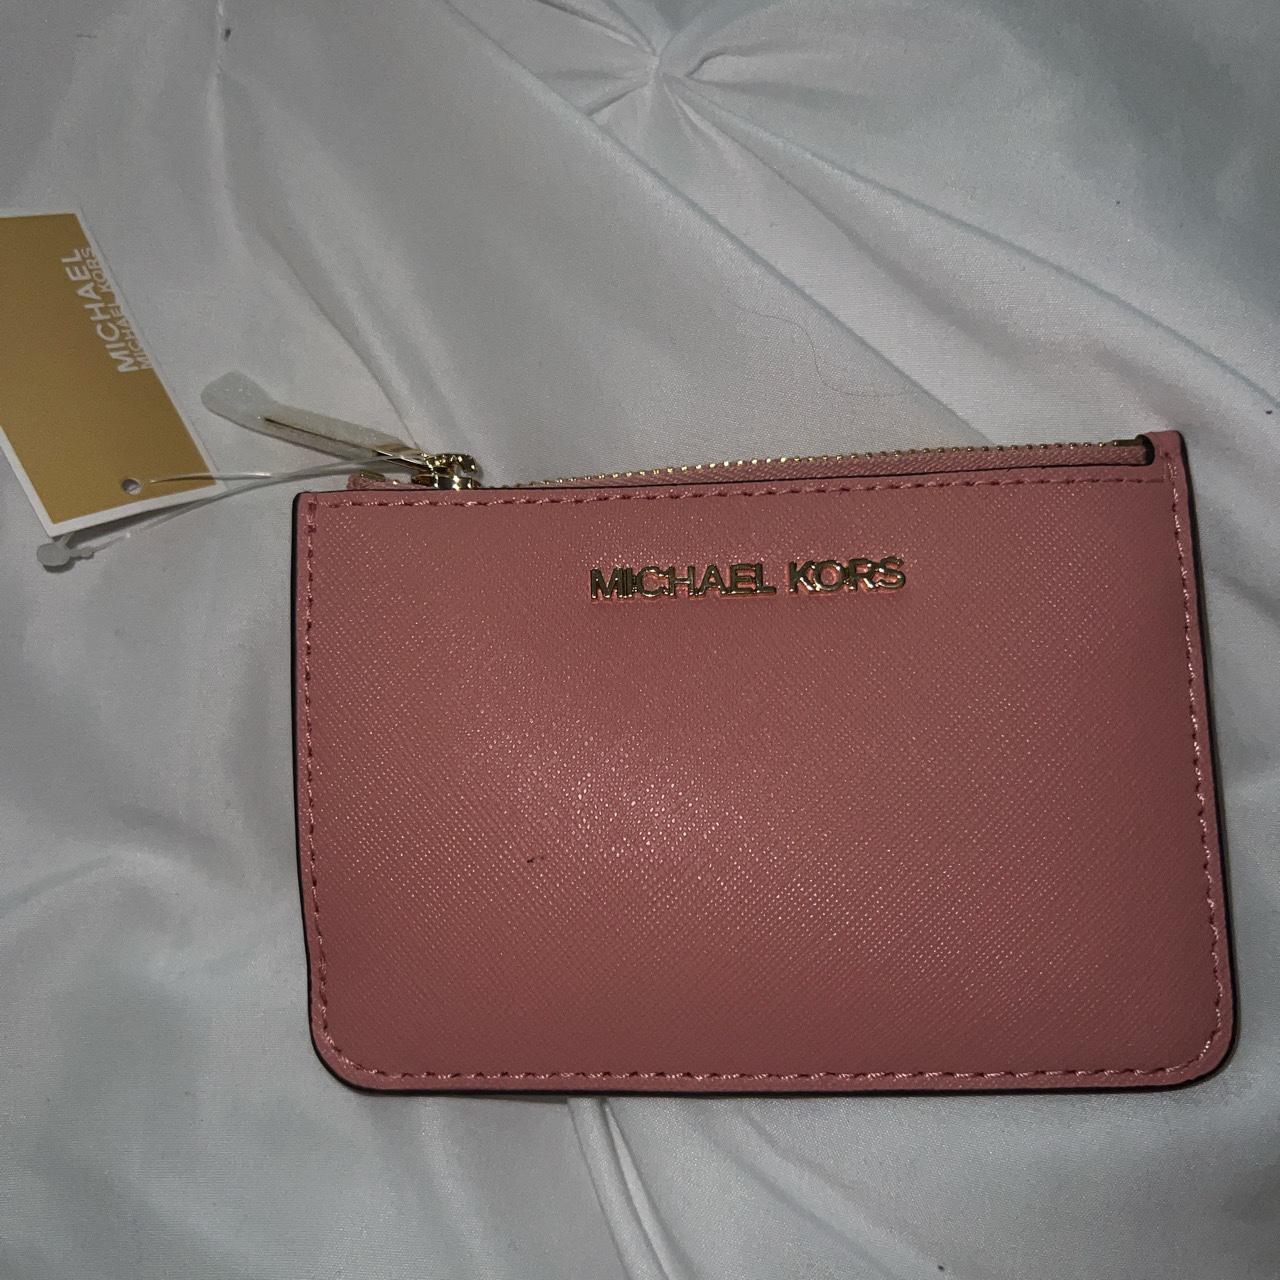 MICHAEL KORS orange purse BRAND NEW!